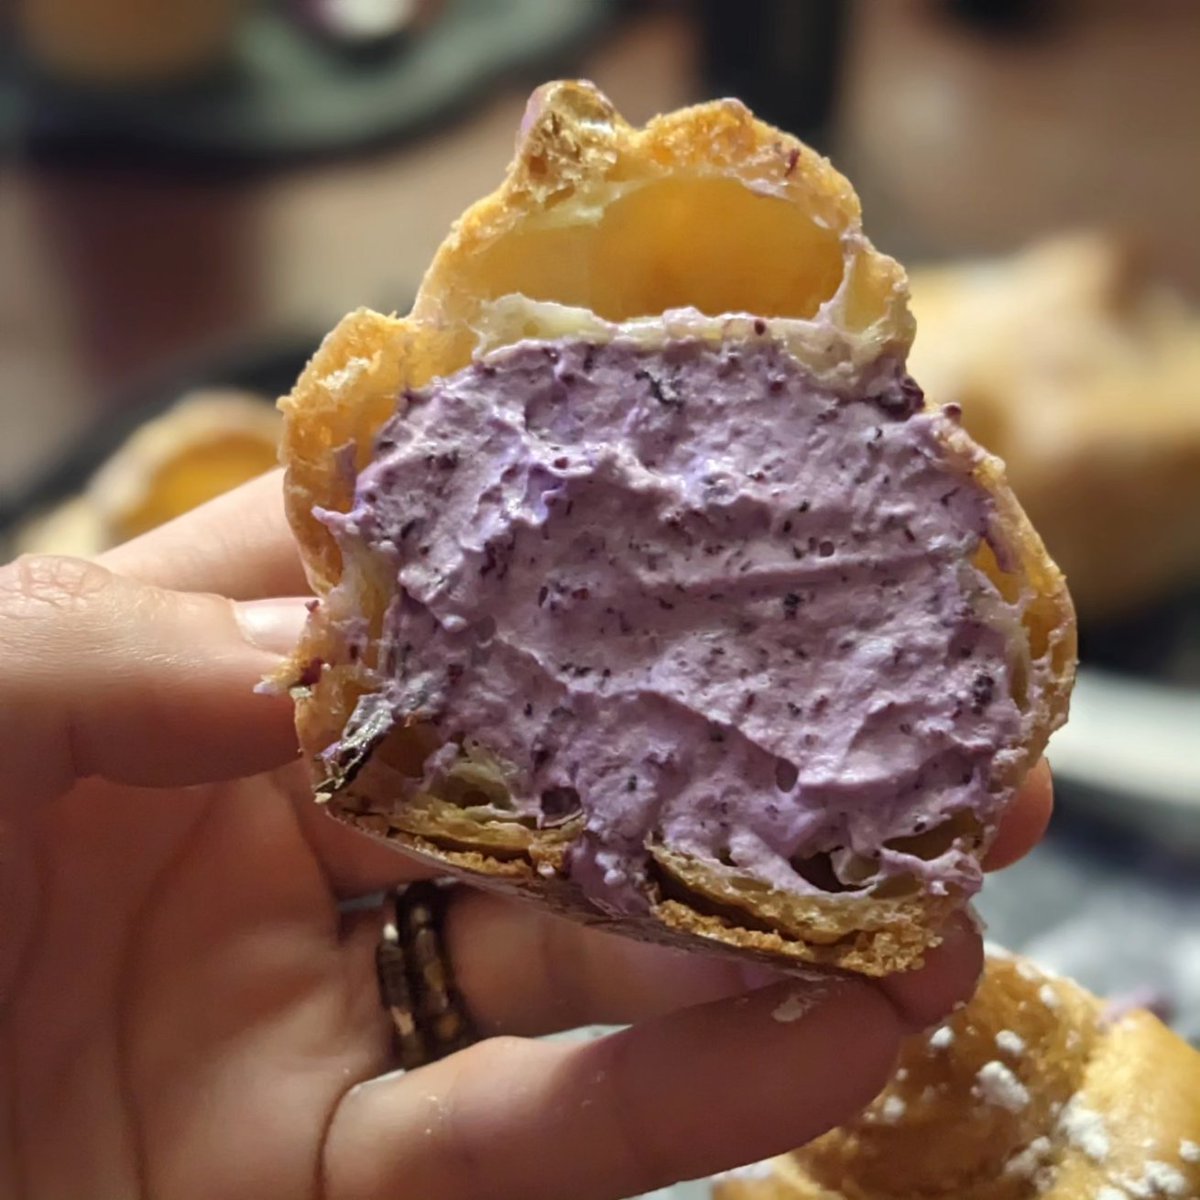 Blueberry & thyme cream puffs 💙 #bake #creampuff #pâteàchoux #chouxpastry